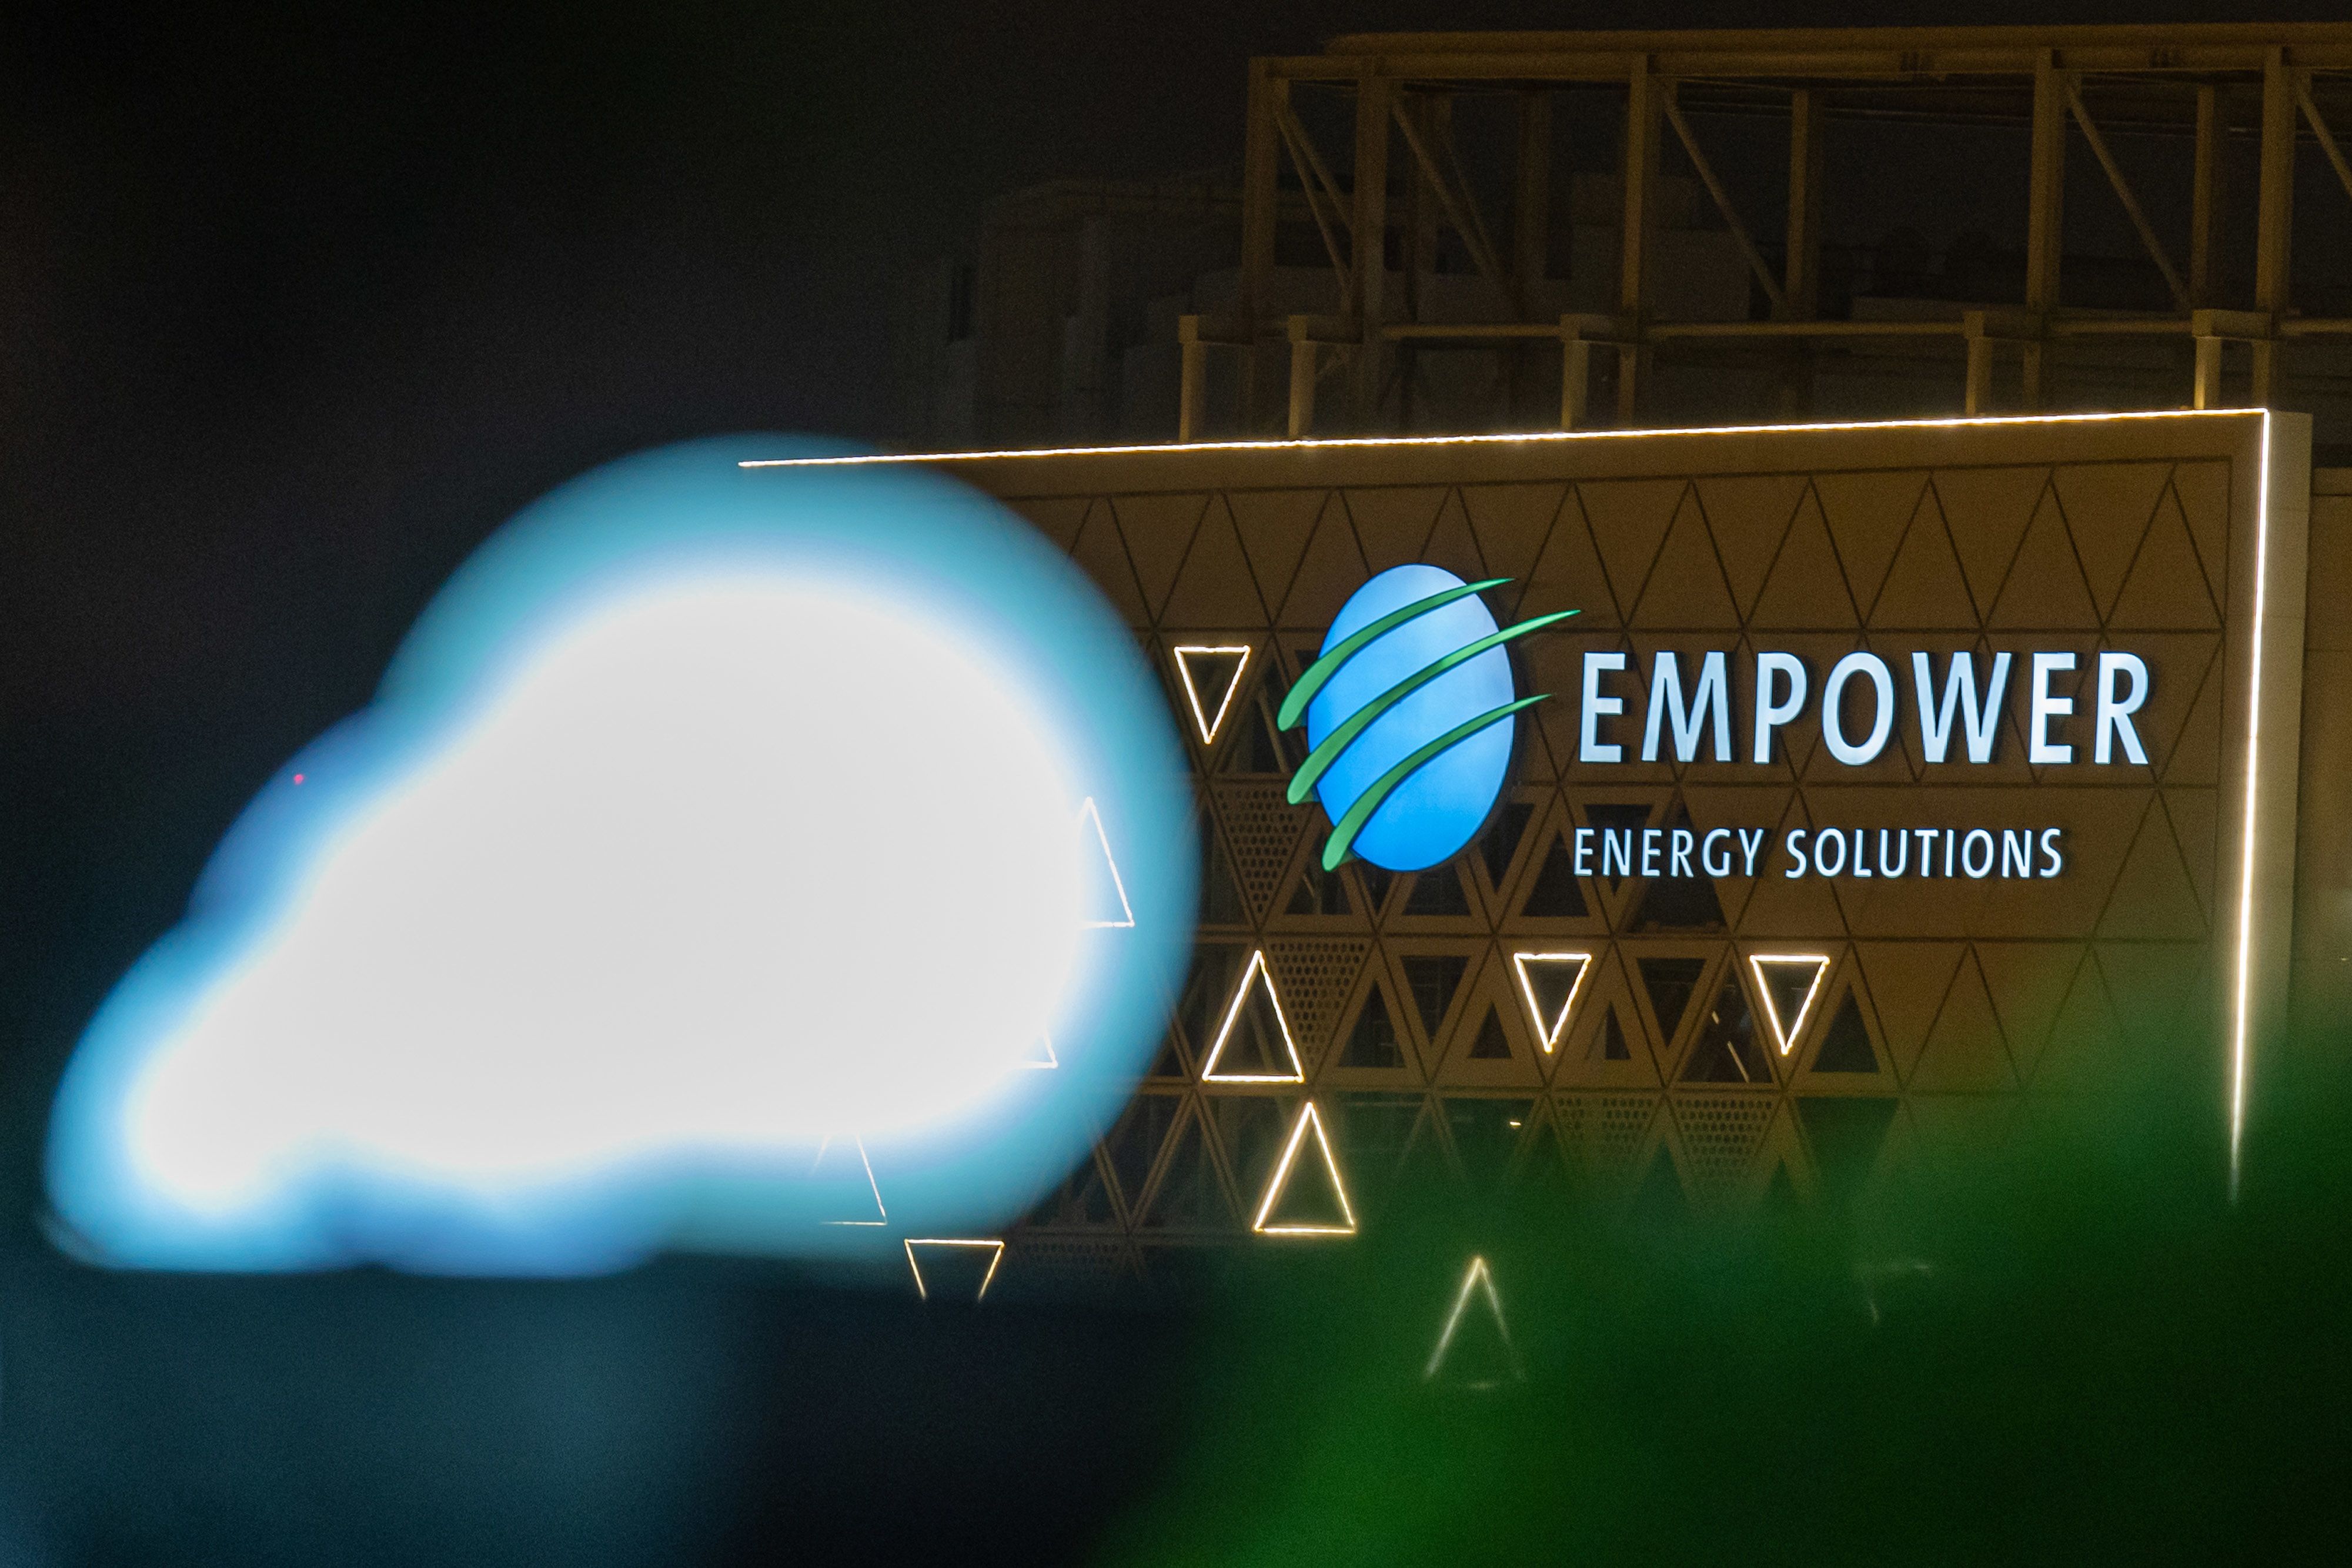 EMPower Energy